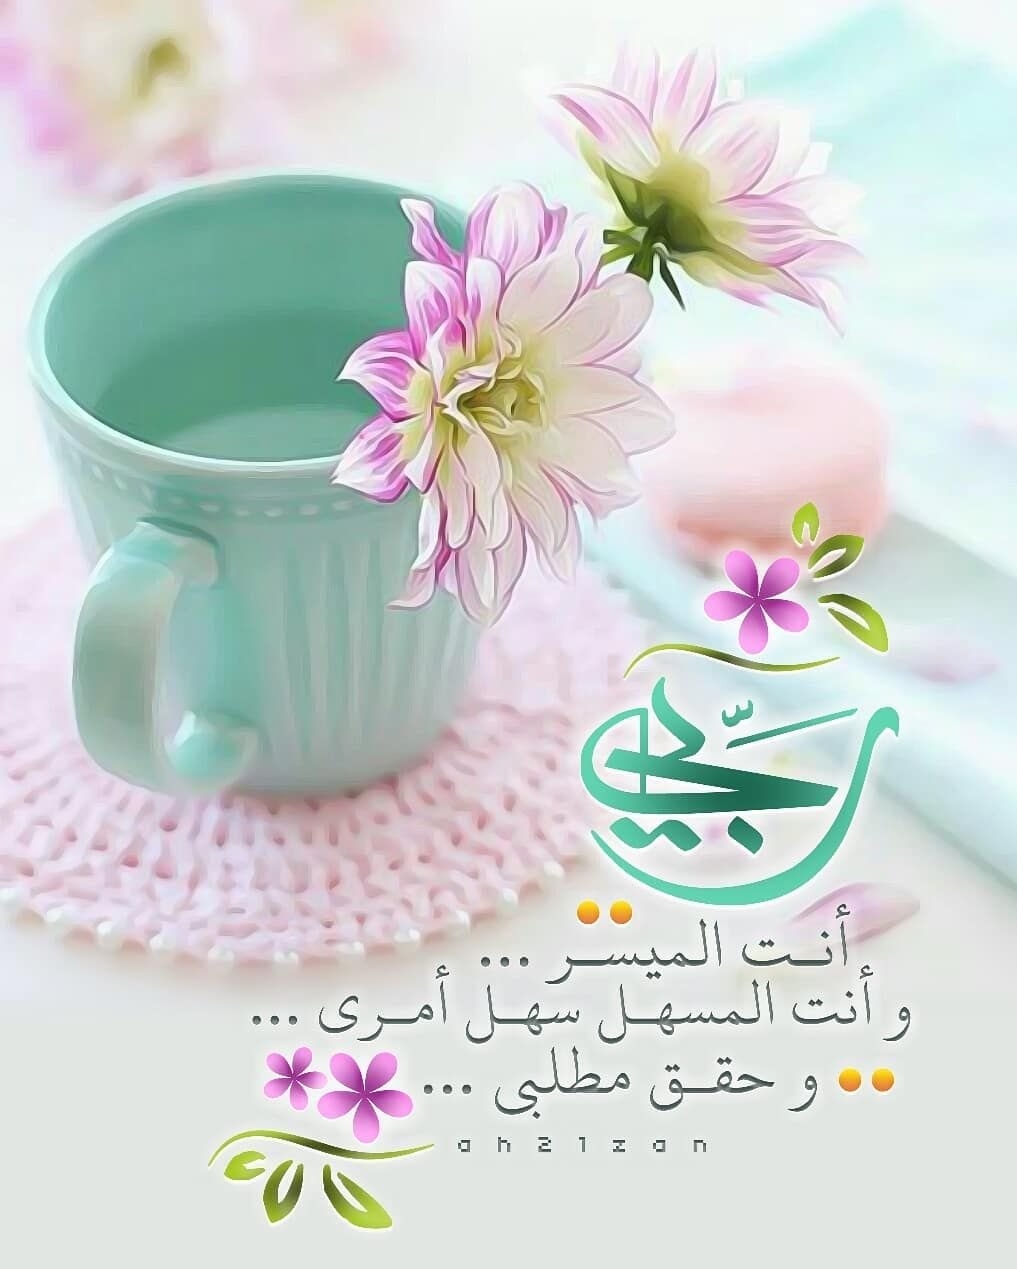 Доброе утро мусульманские пожелания. Мусульманские пожелания с добрым утром. Исламские пожелания доброго утра. Мусульманские поздравления с добрым утром!.